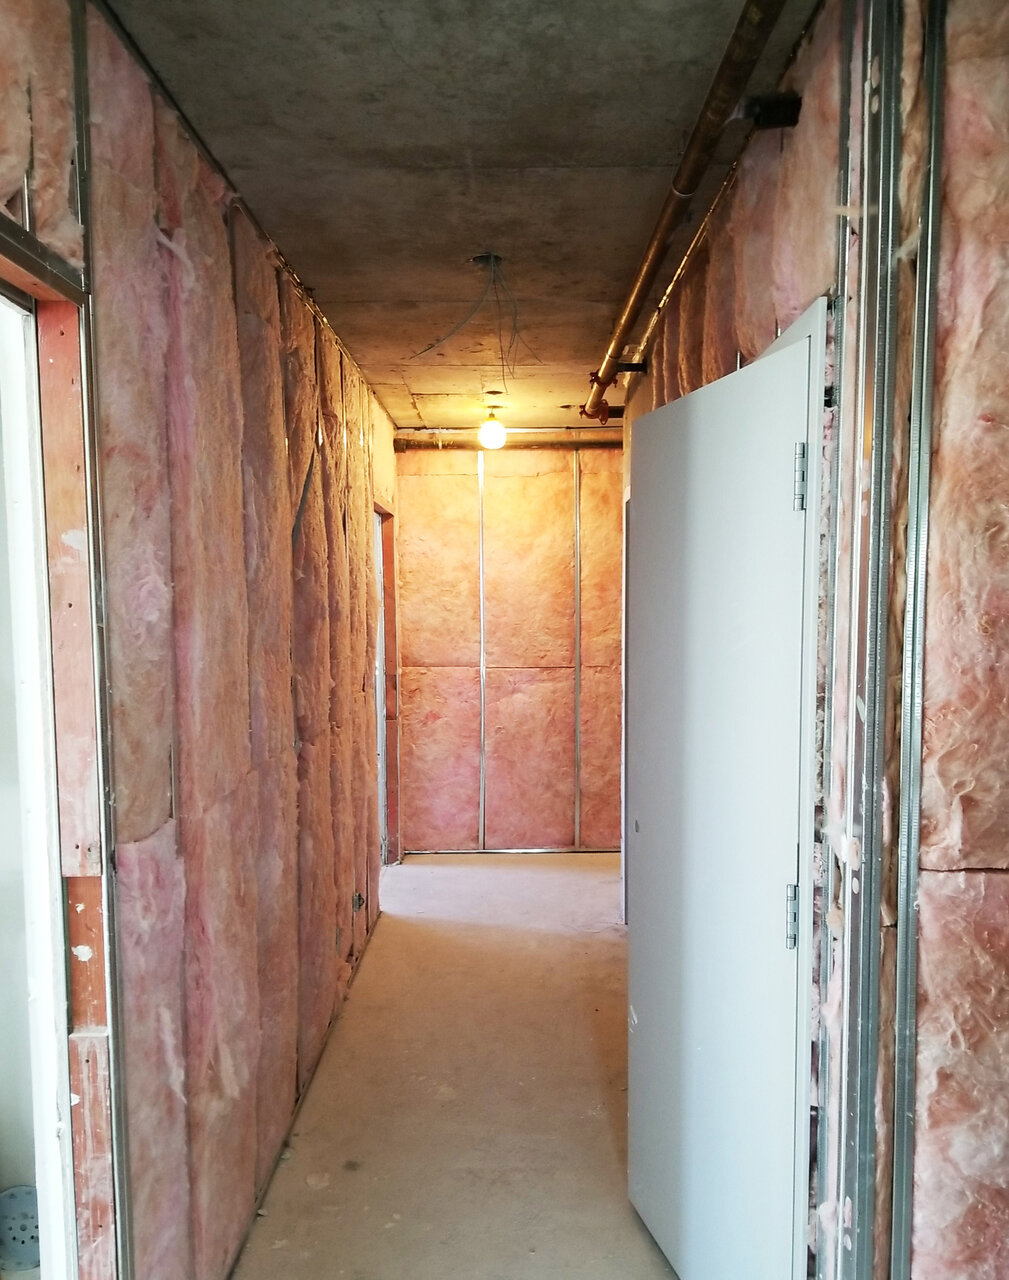 Theory_1_corridor insulation installation.jpg